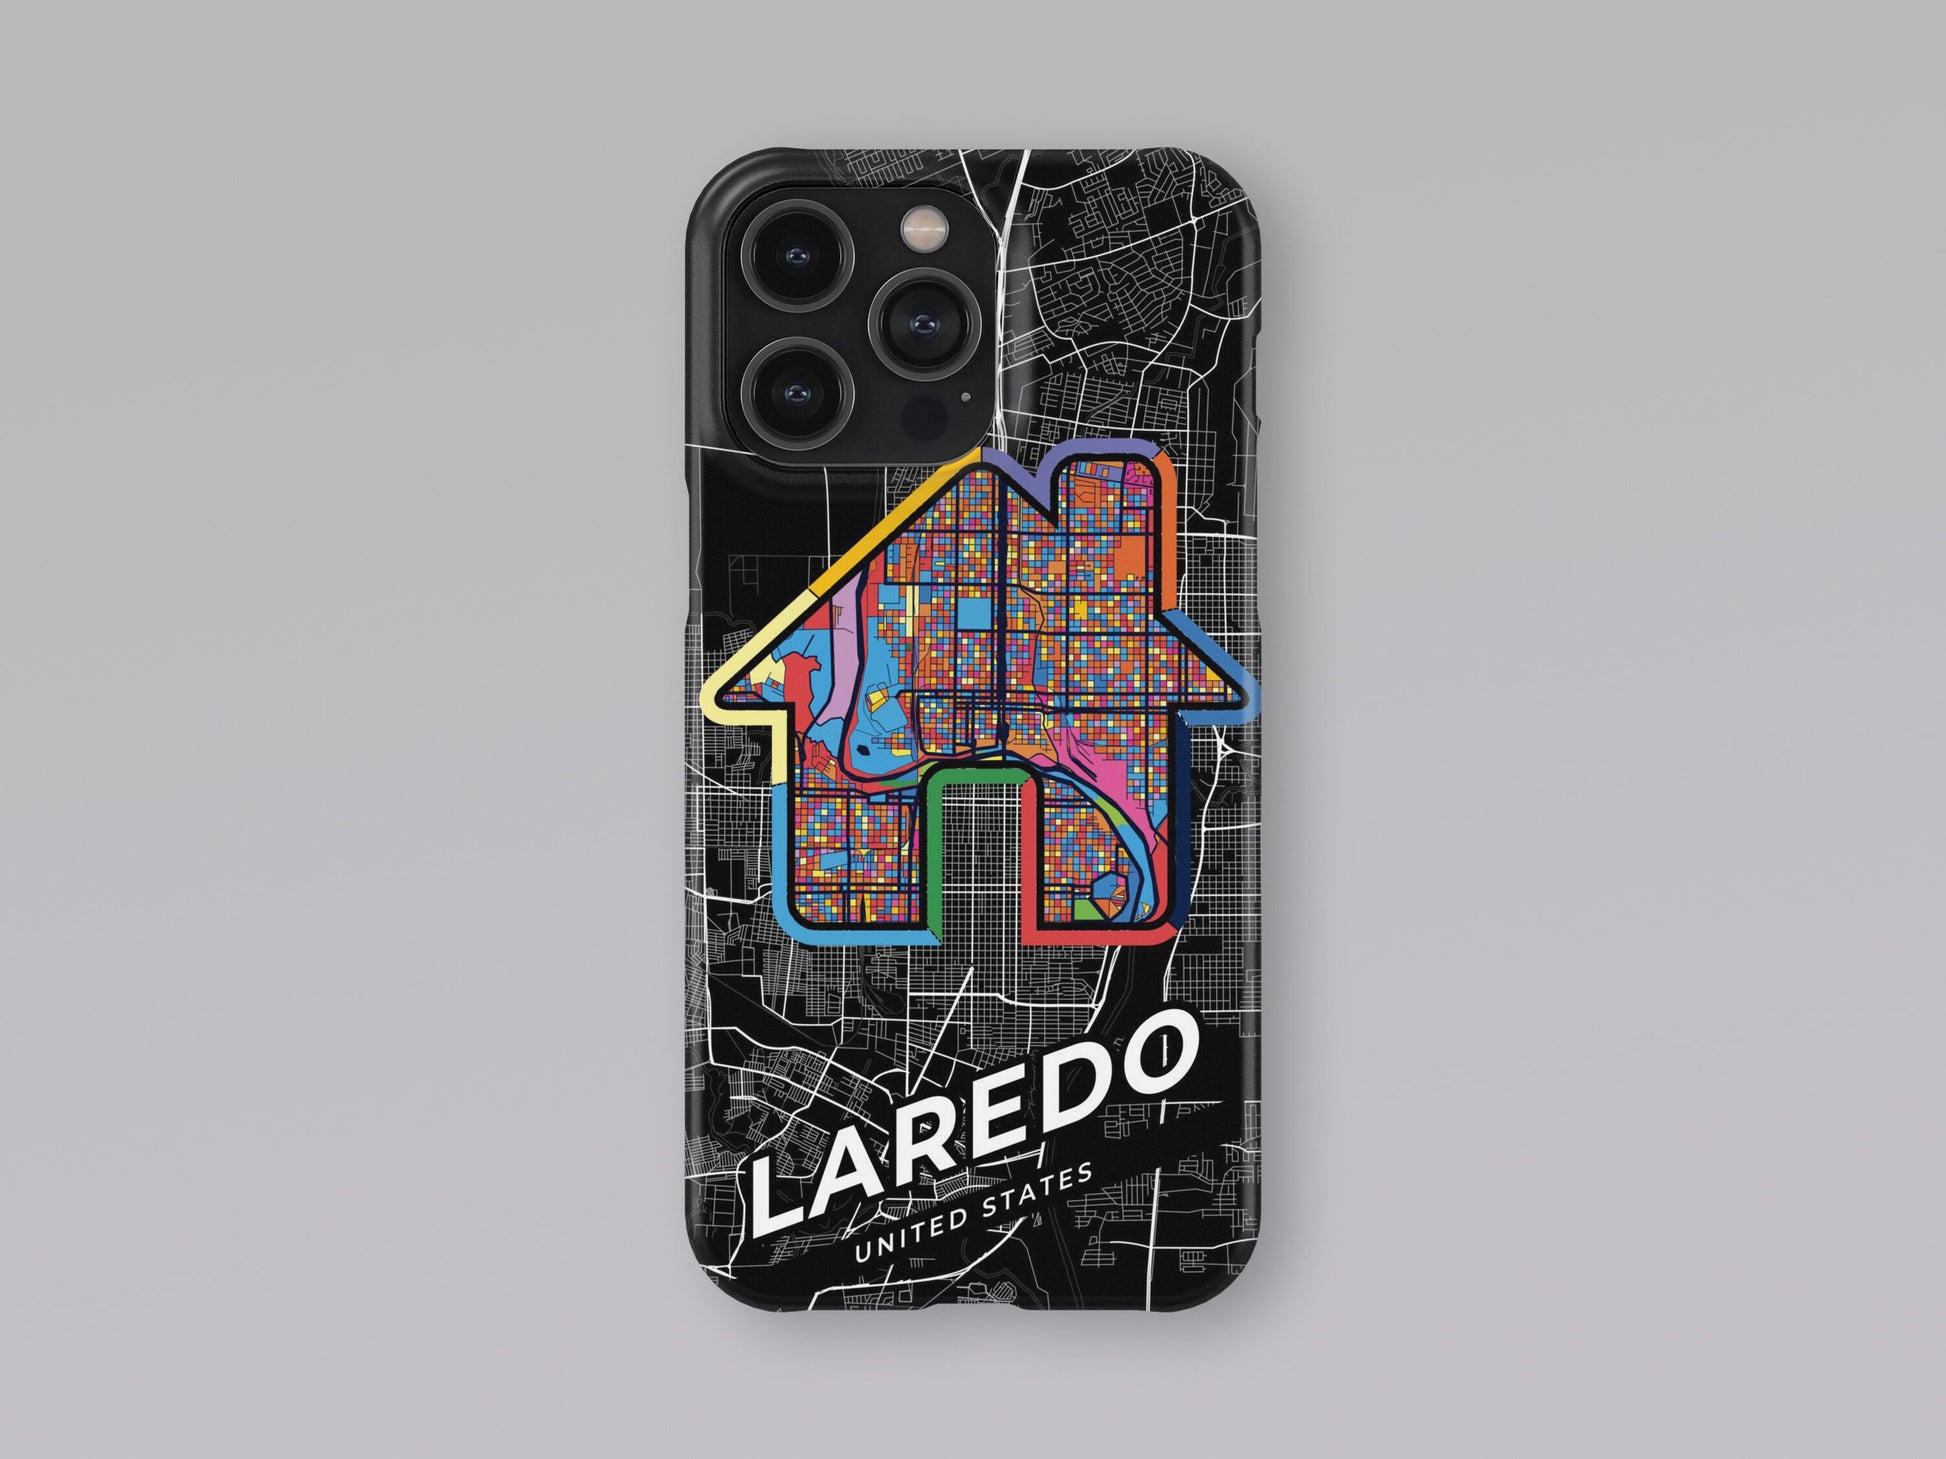 Laredo Texas slim phone case with colorful icon. Birthday, wedding or housewarming gift. Couple match cases. 3